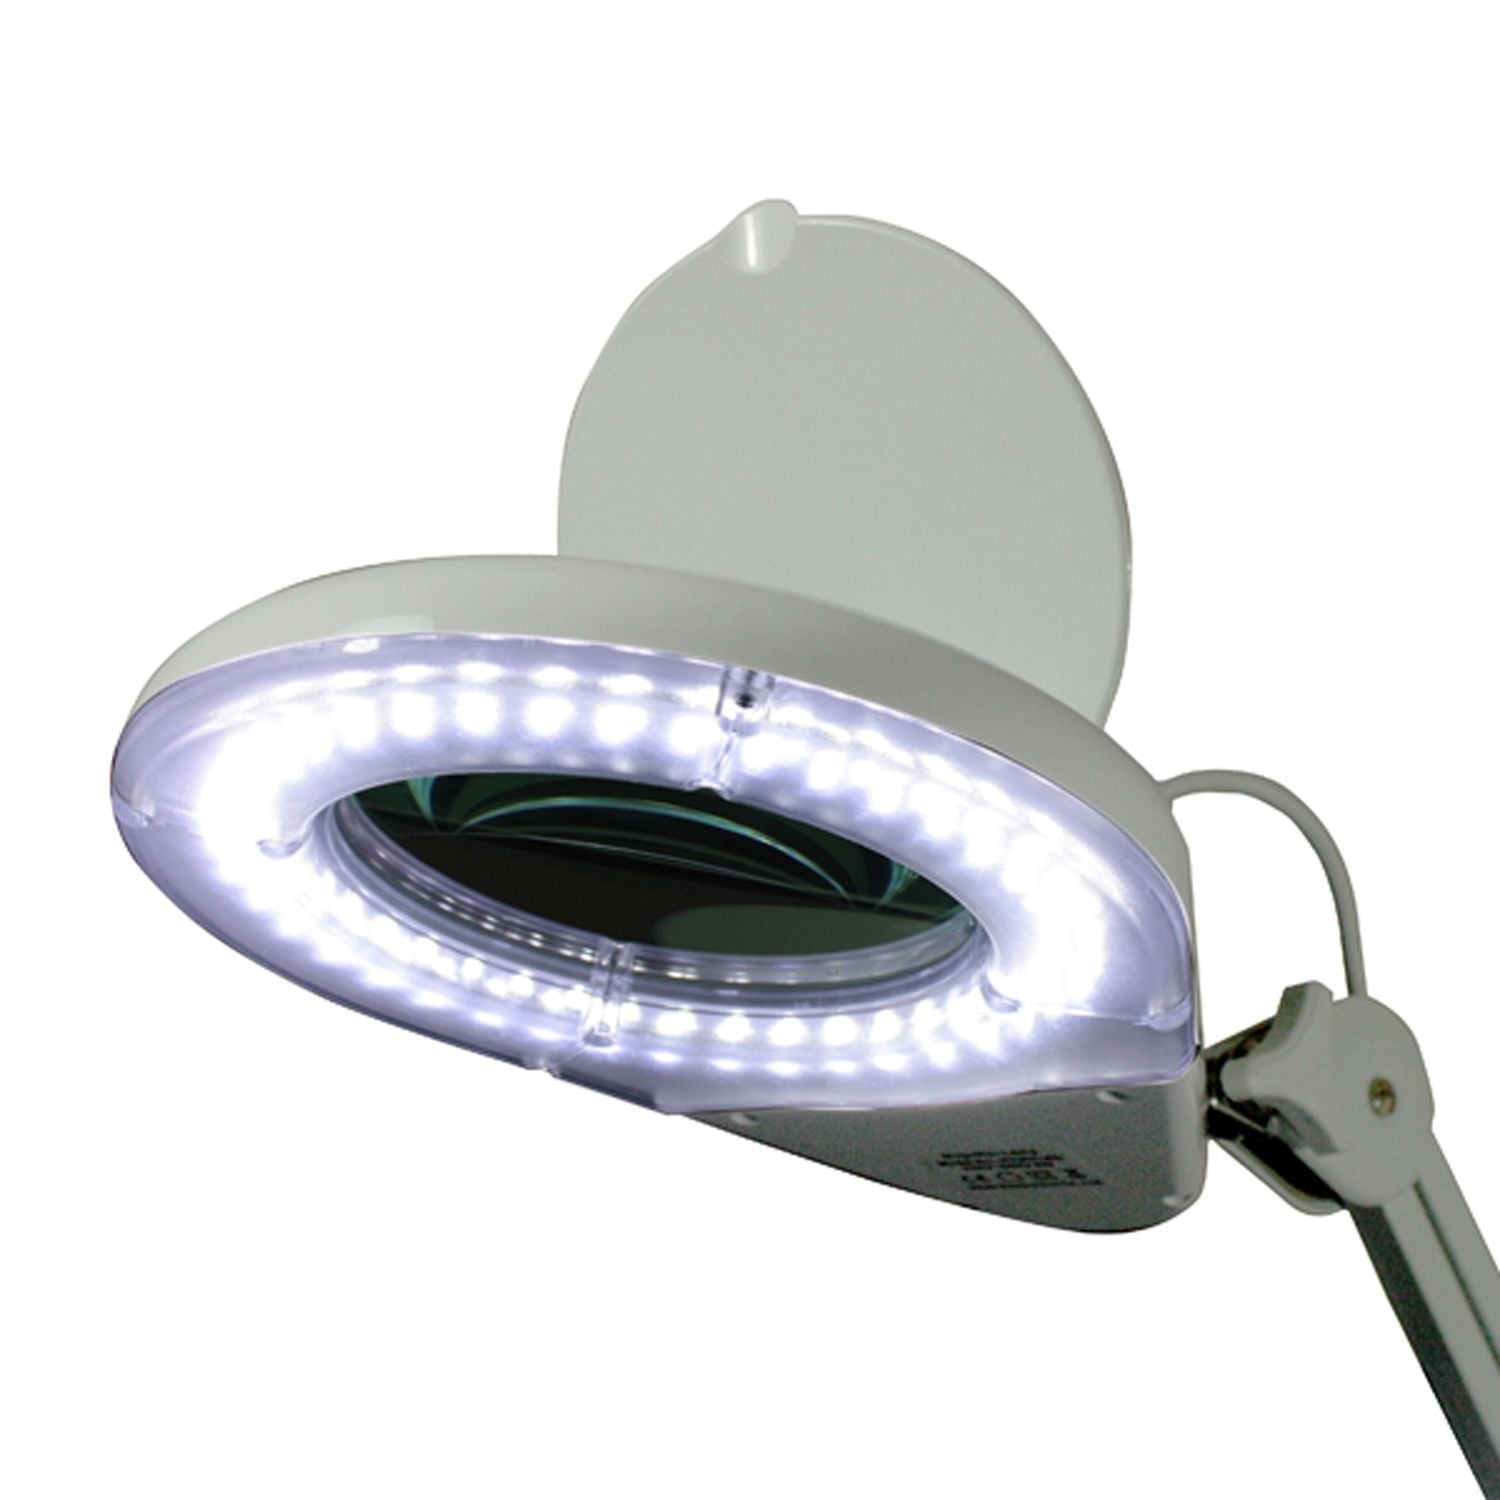 Daray Circular LED Magnifying Light | 3 Diopter, Desk Mounted